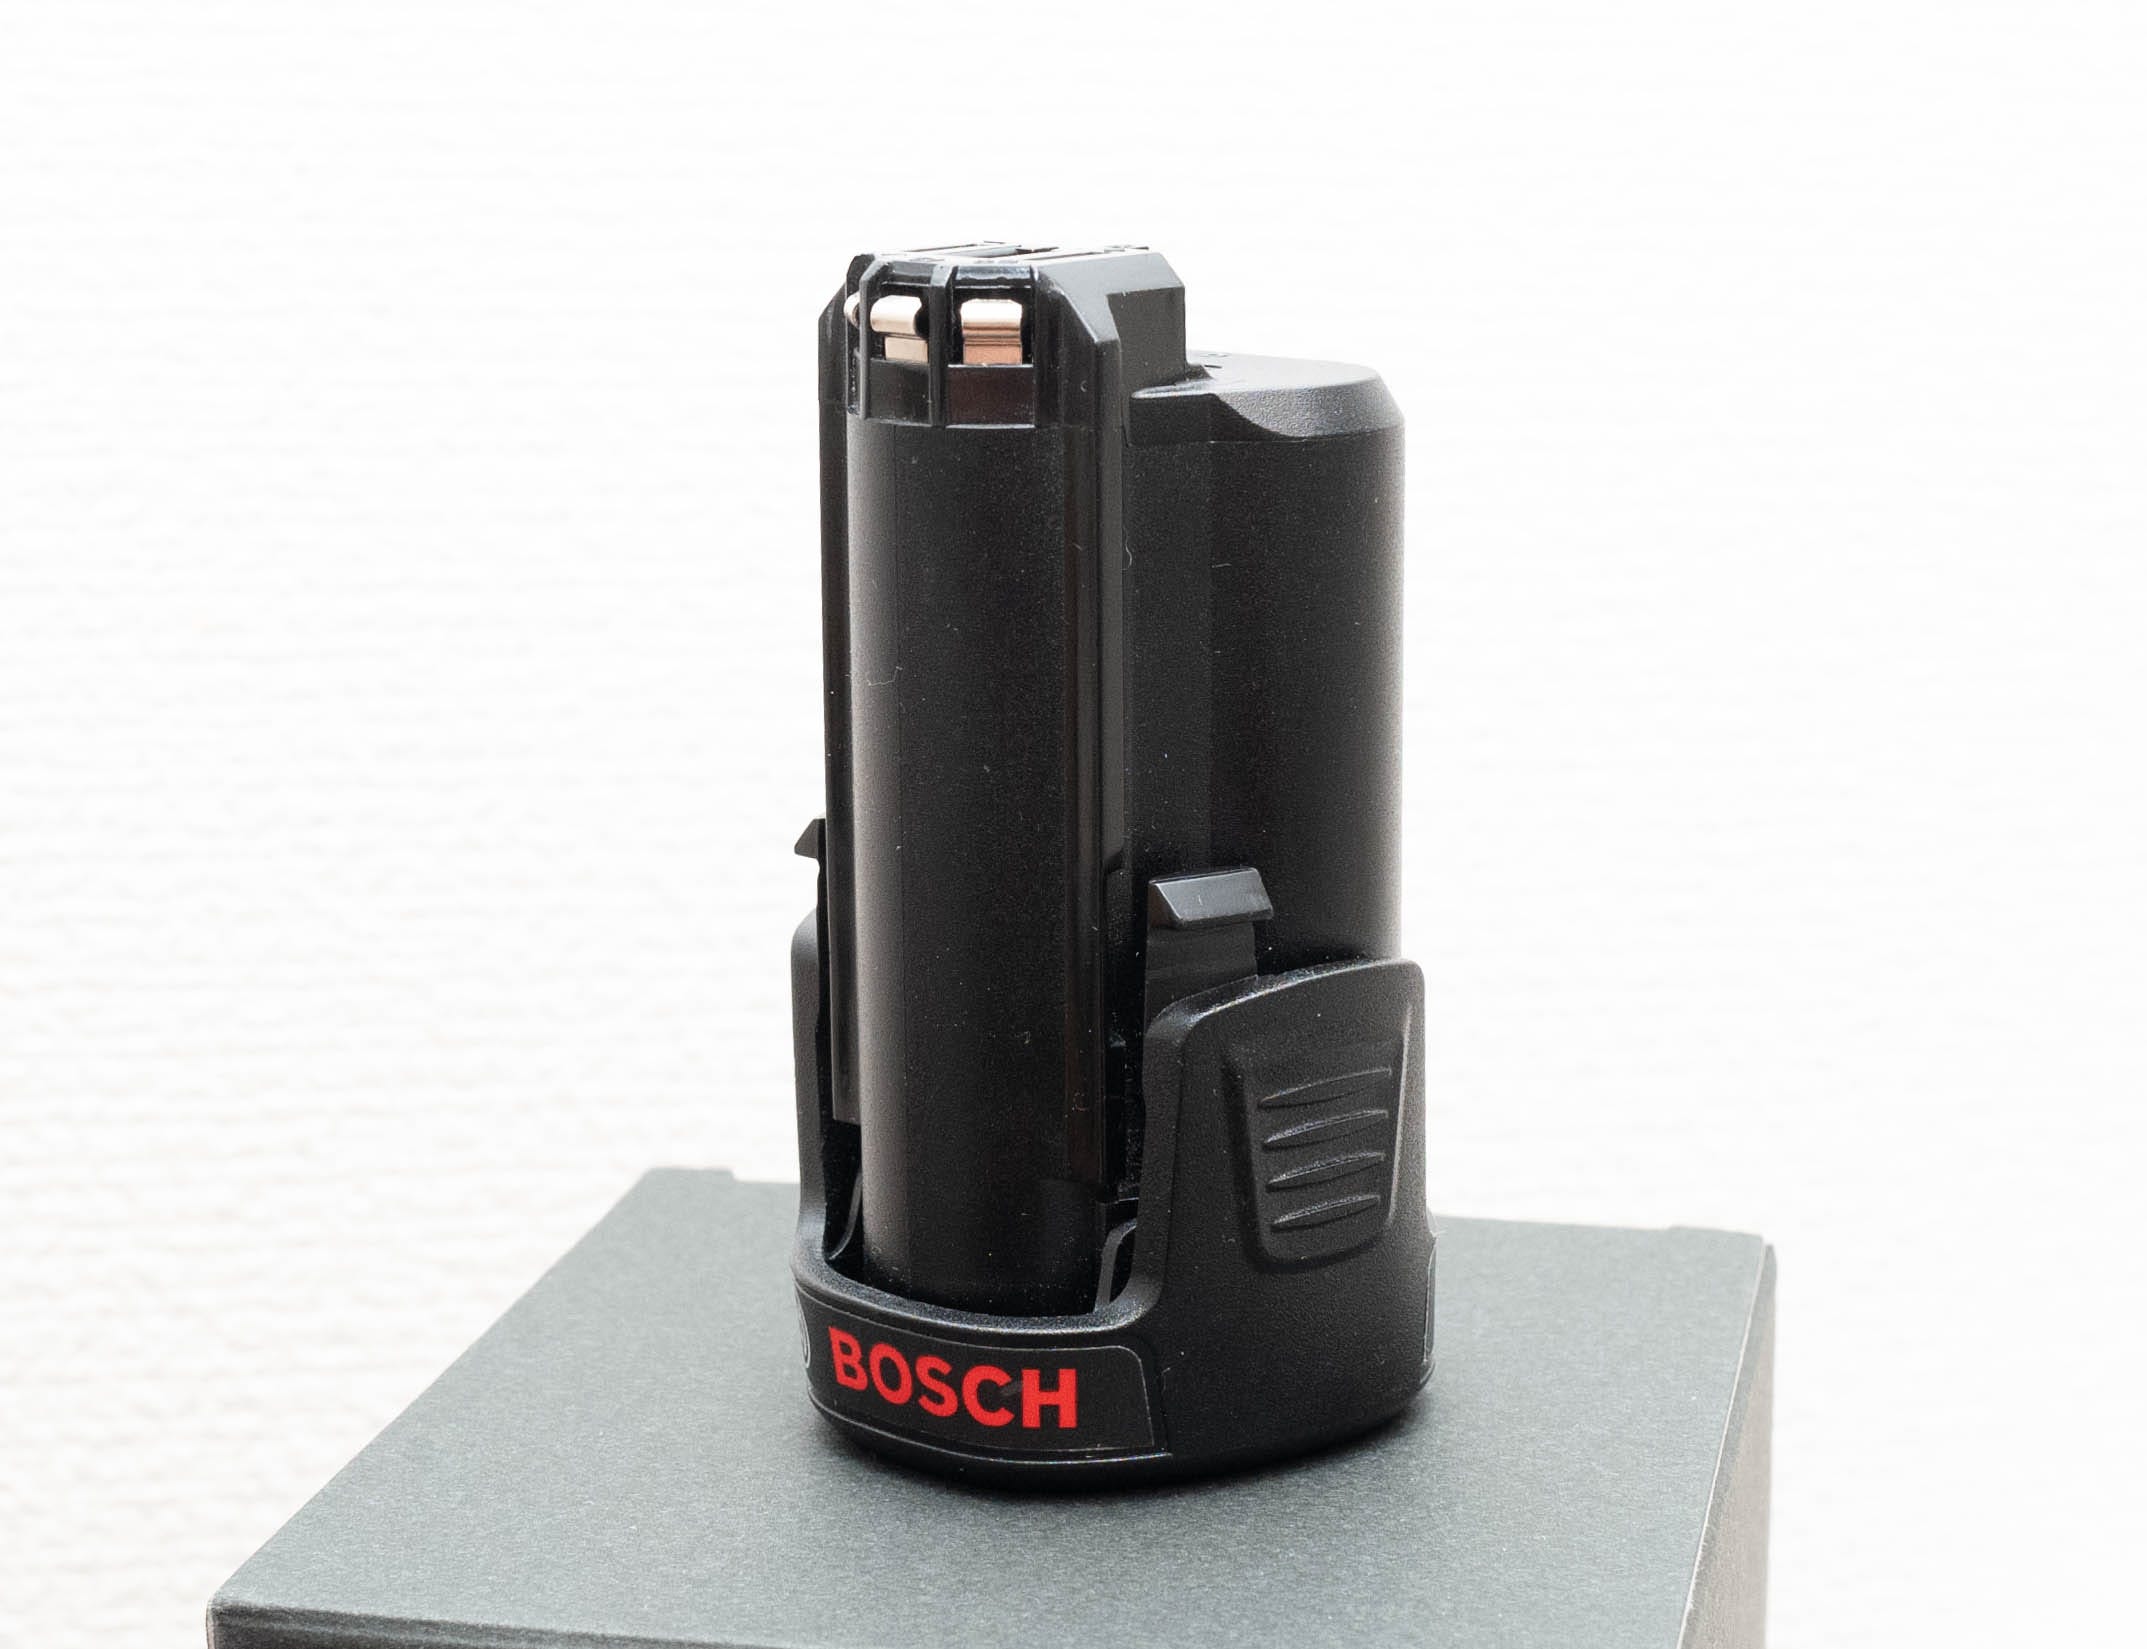 BOSCHのバッテリーを使いまわす. Bosch（ボッシュ）のリチウムイオンバッテリーを使い回せる便利なアダプターを作… | by Tomo